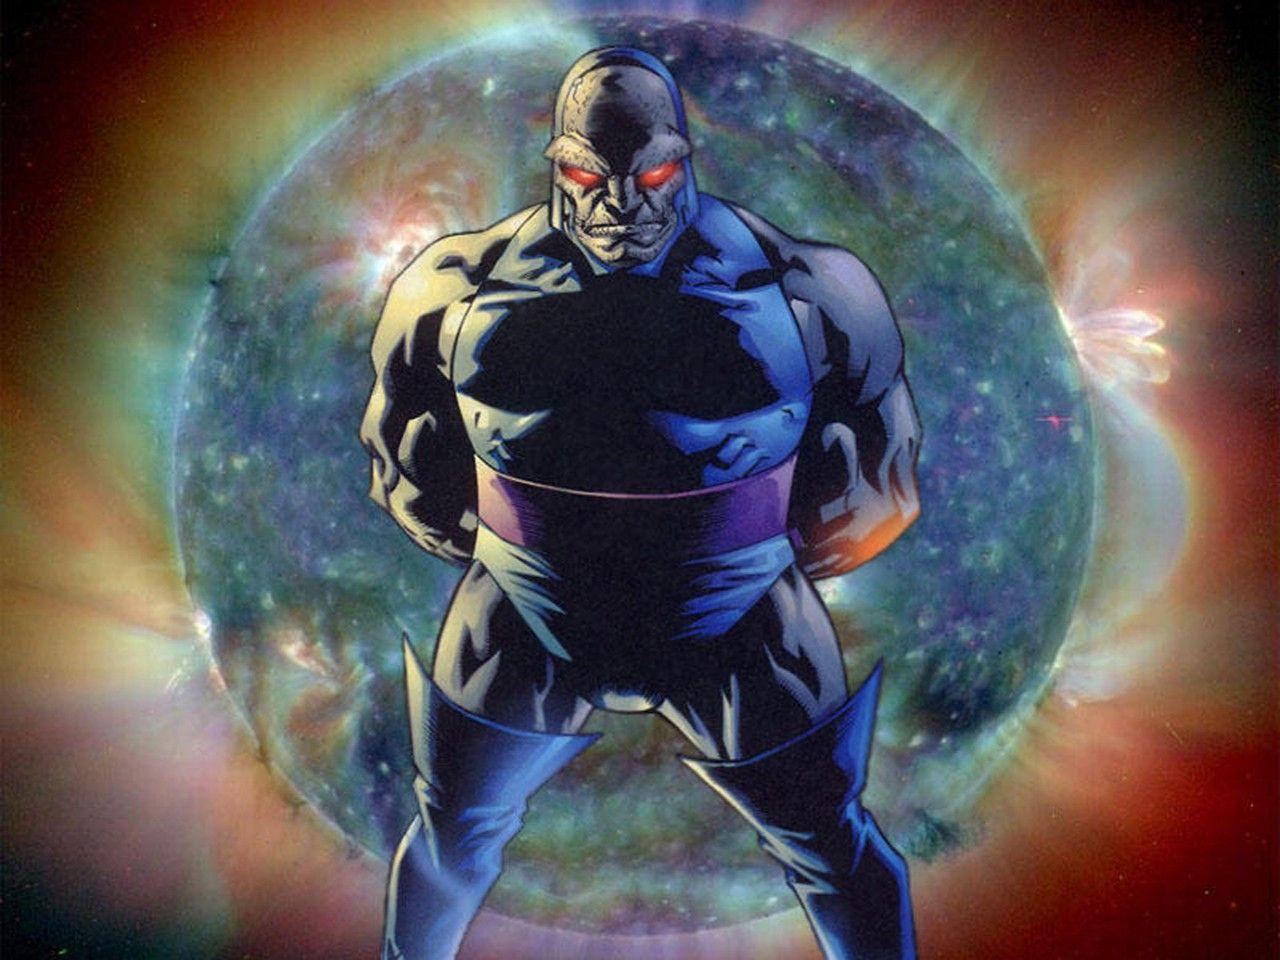 Darkseid wants to rule the world